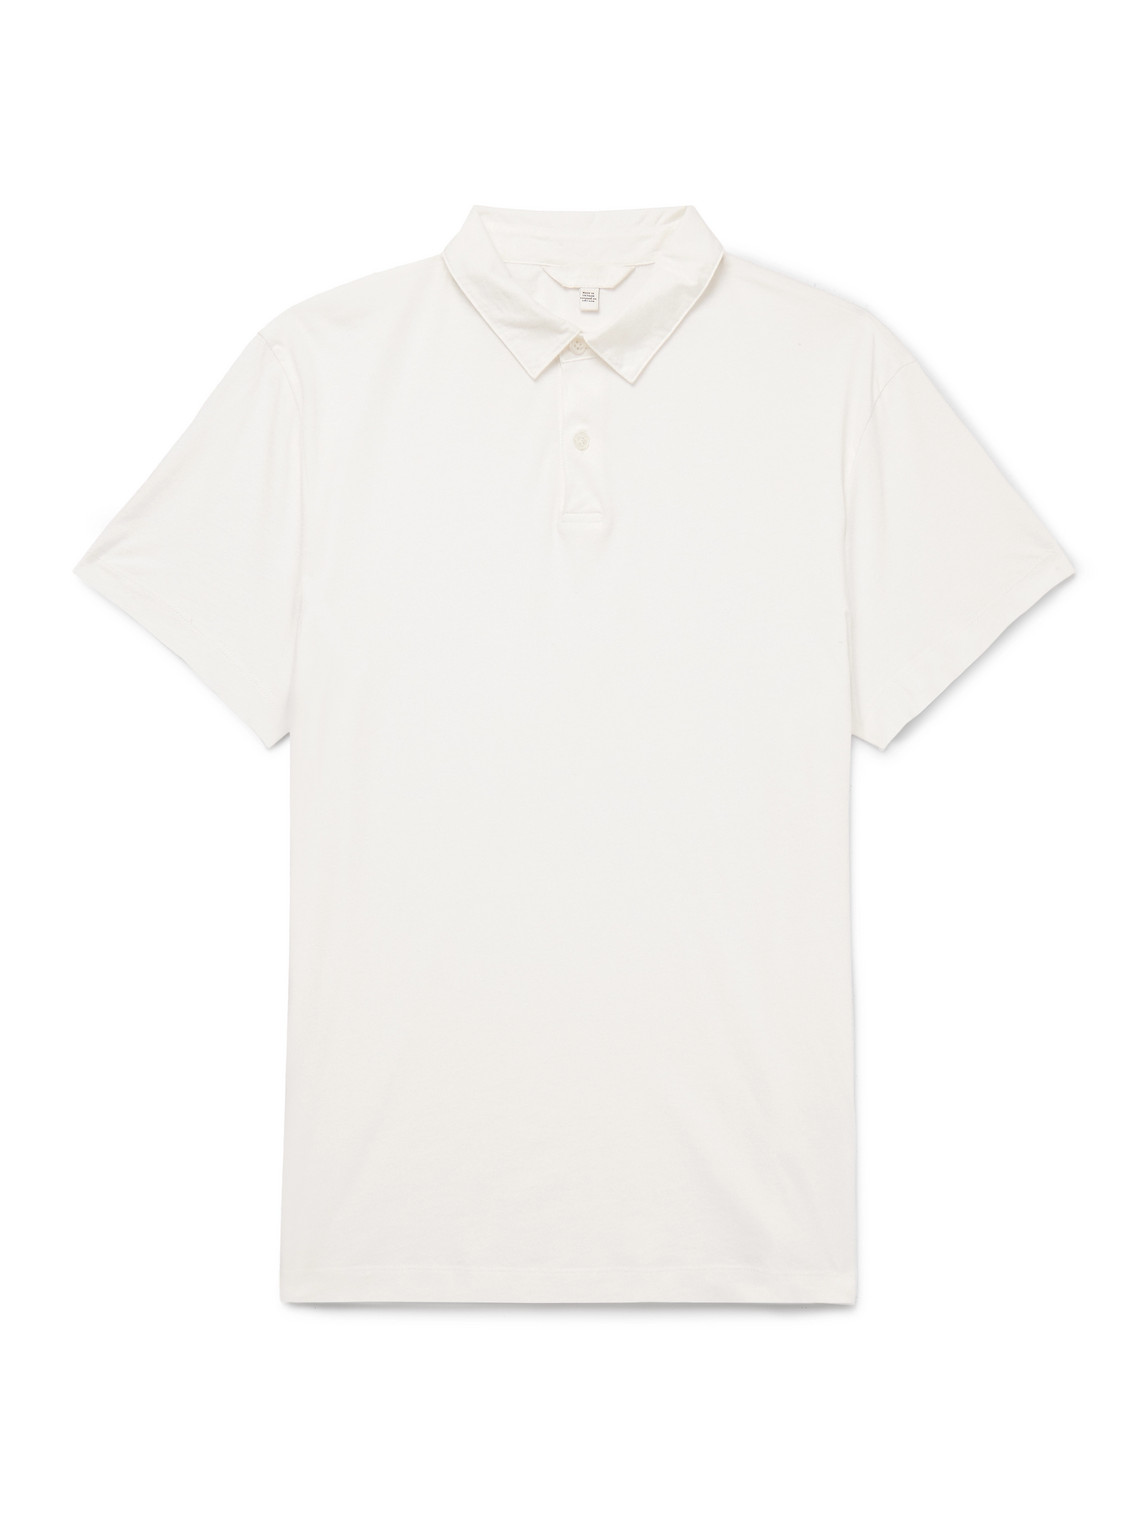 Club Monaco - Sea Island Cotton-Jersey Polo Shirt - Men - White - L von Club Monaco